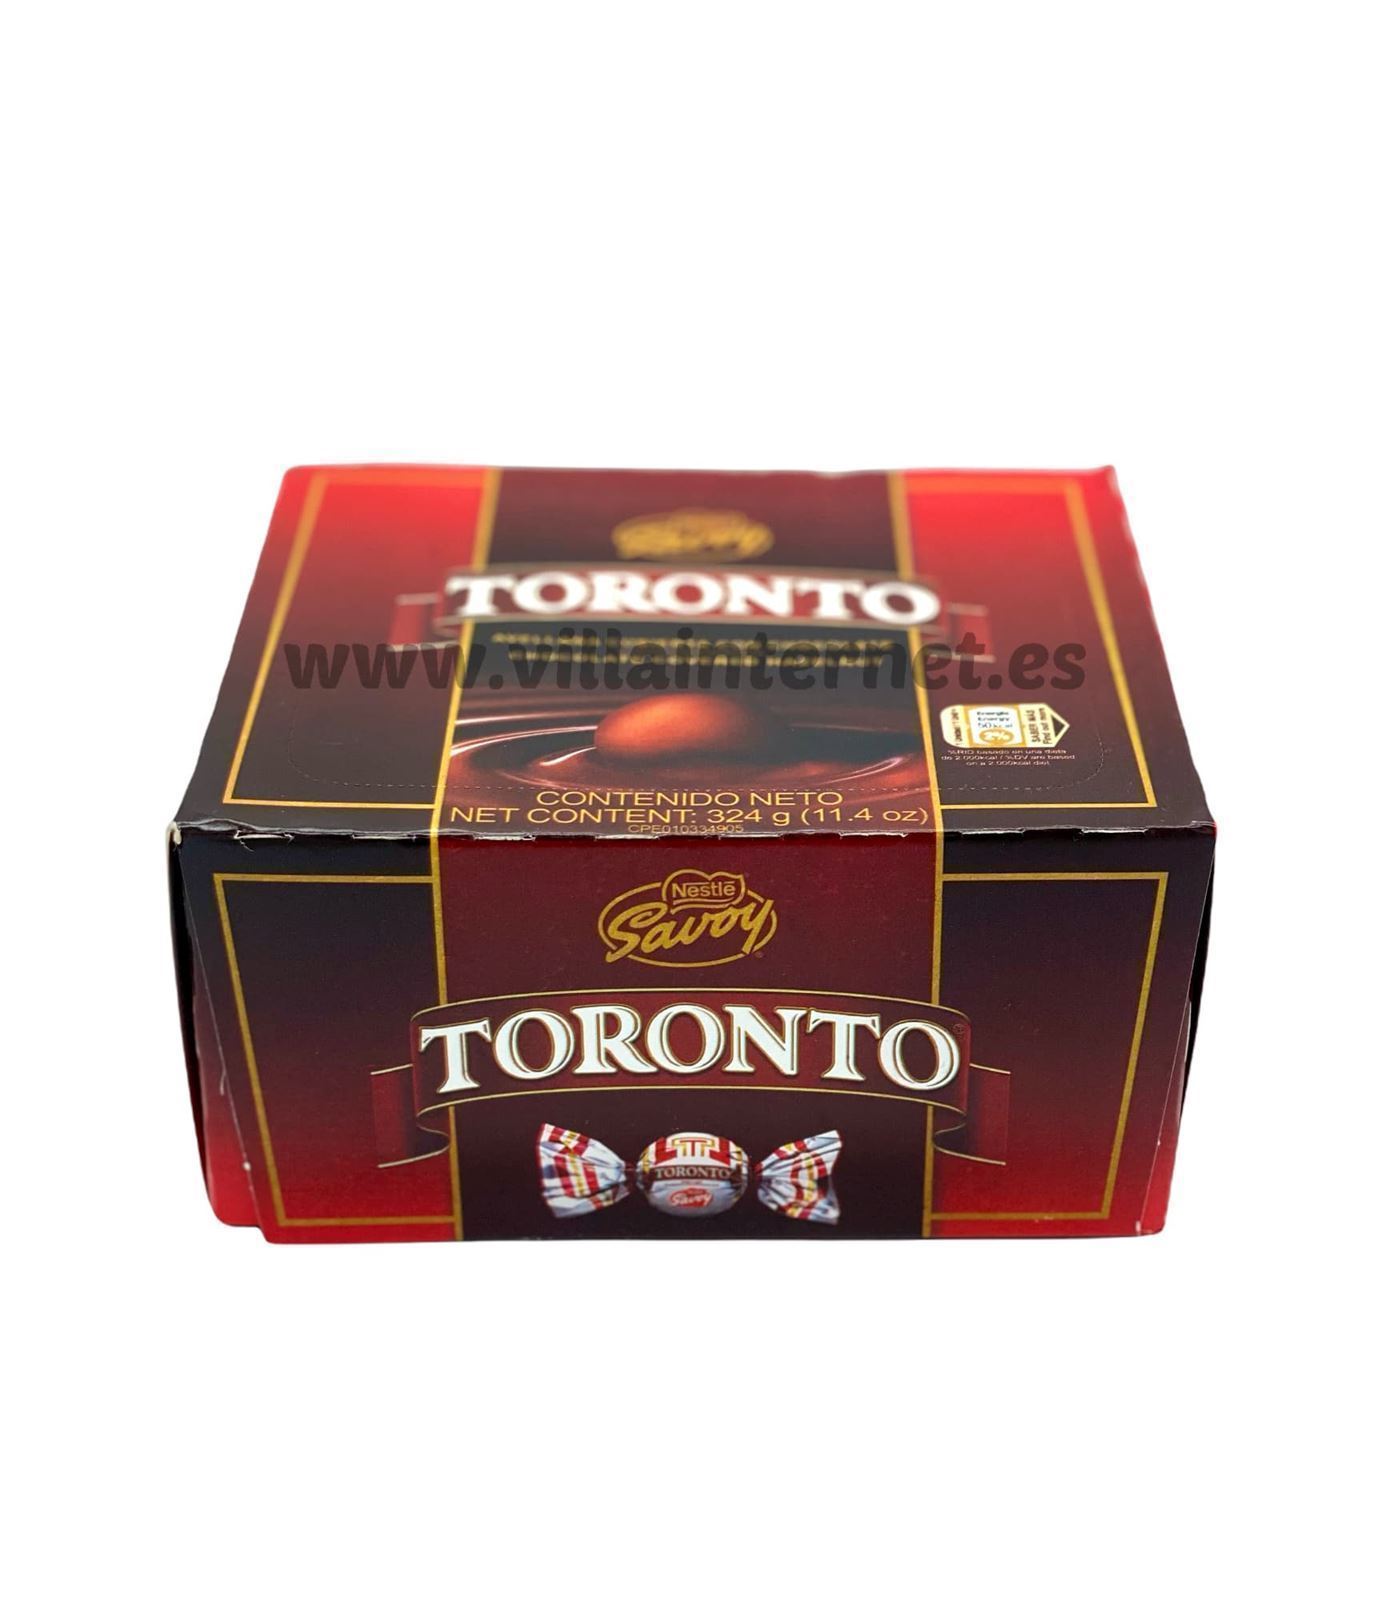 Toronto caja 36uds. - Imagen 1